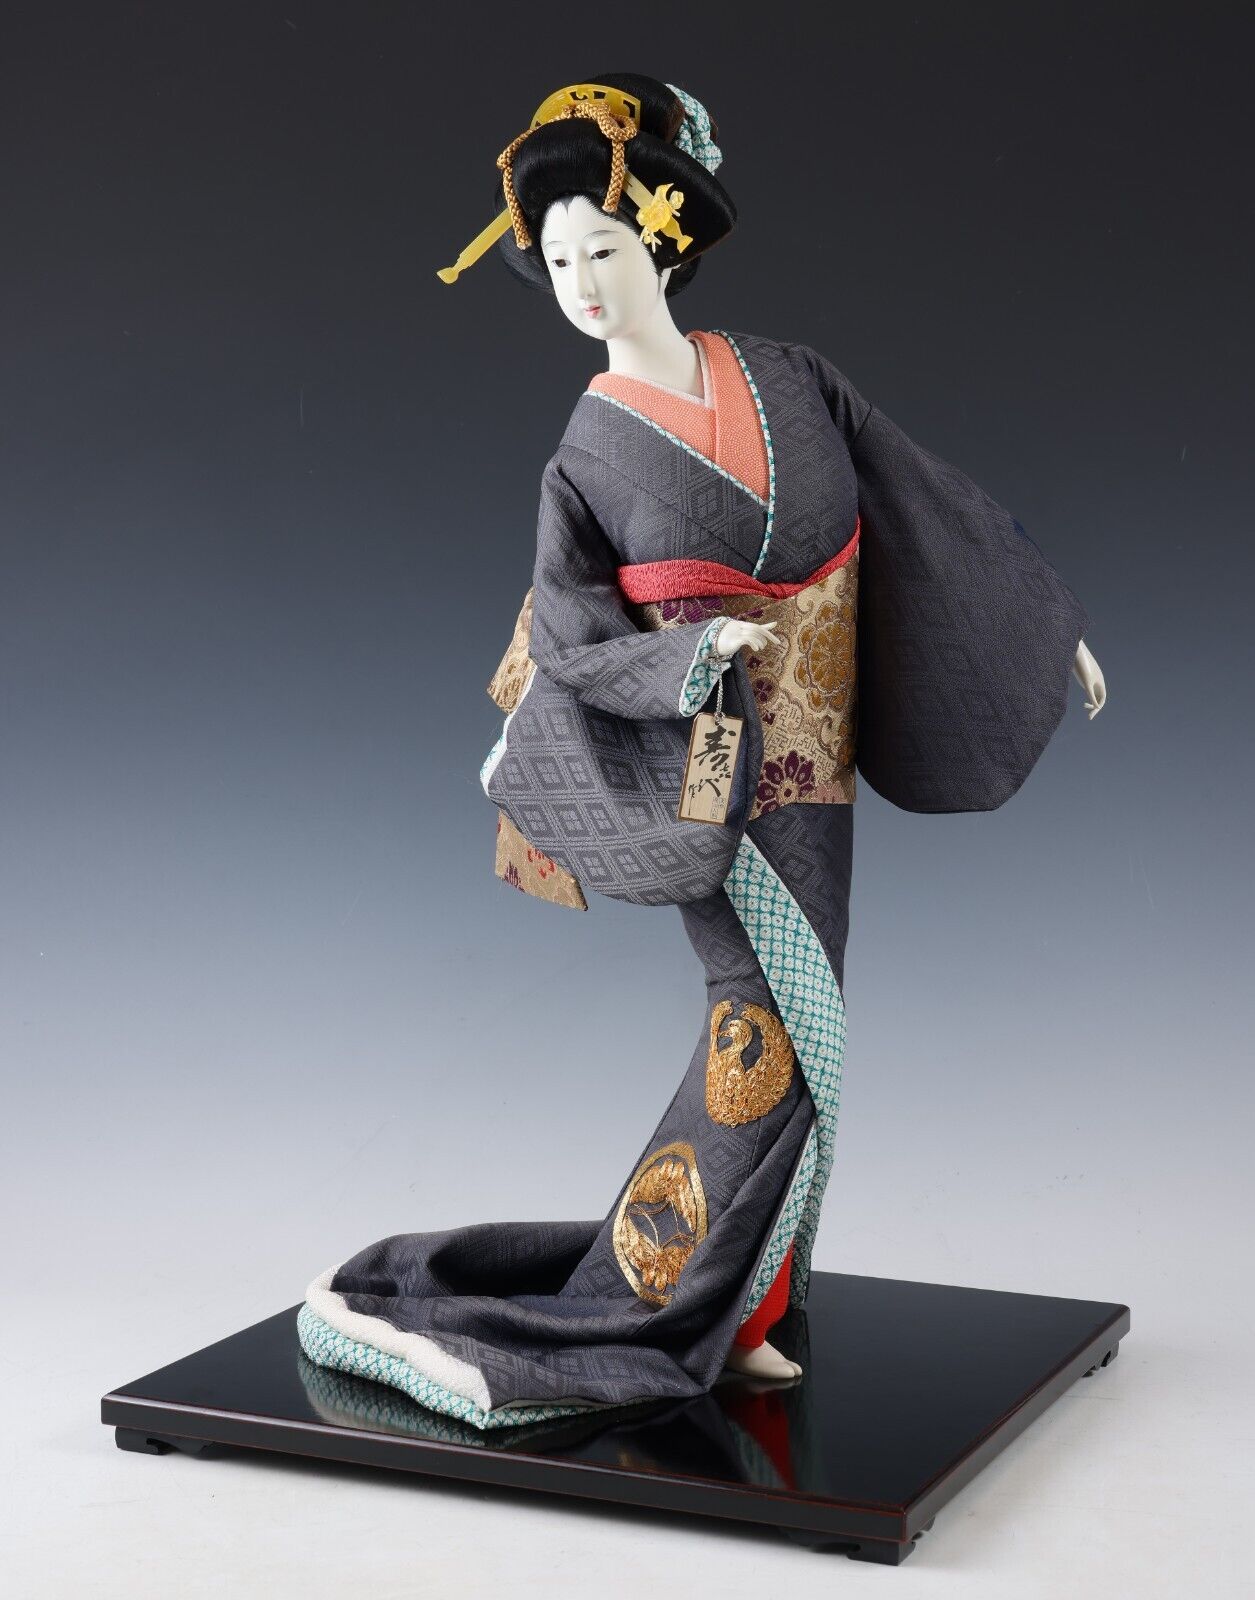 Vintage Japanese Traditional Art Collectible Geisha Doll in Kimono from Showa Era.